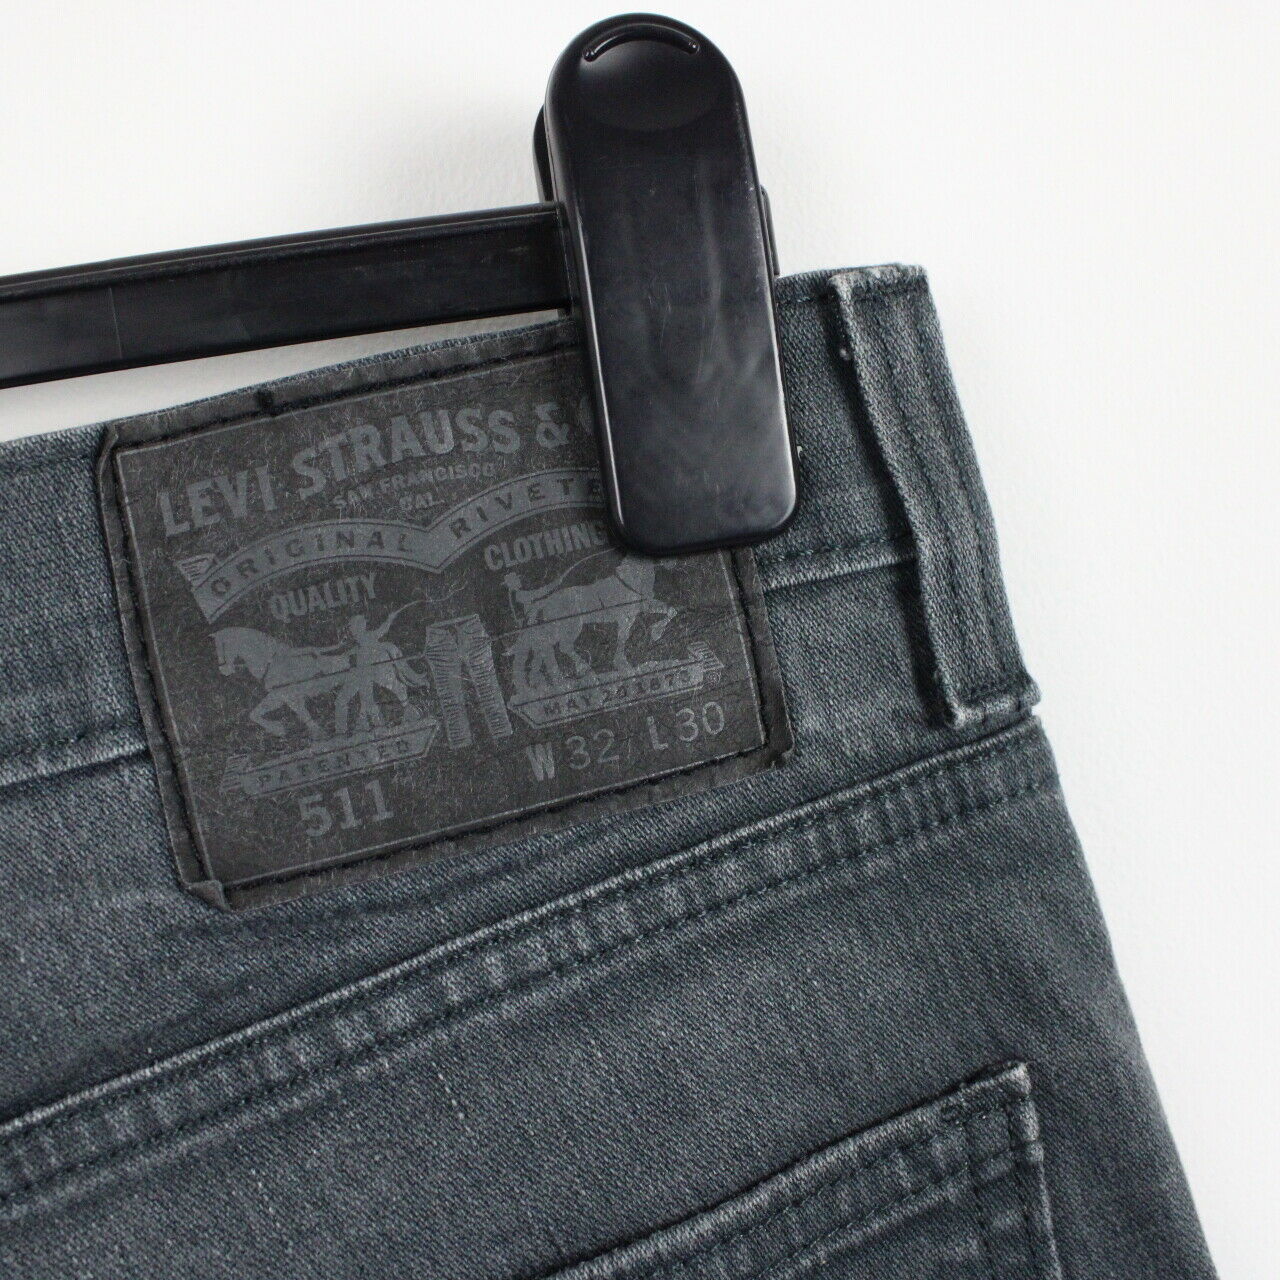 LEVIS 511 Jeans Grey | W32 L30